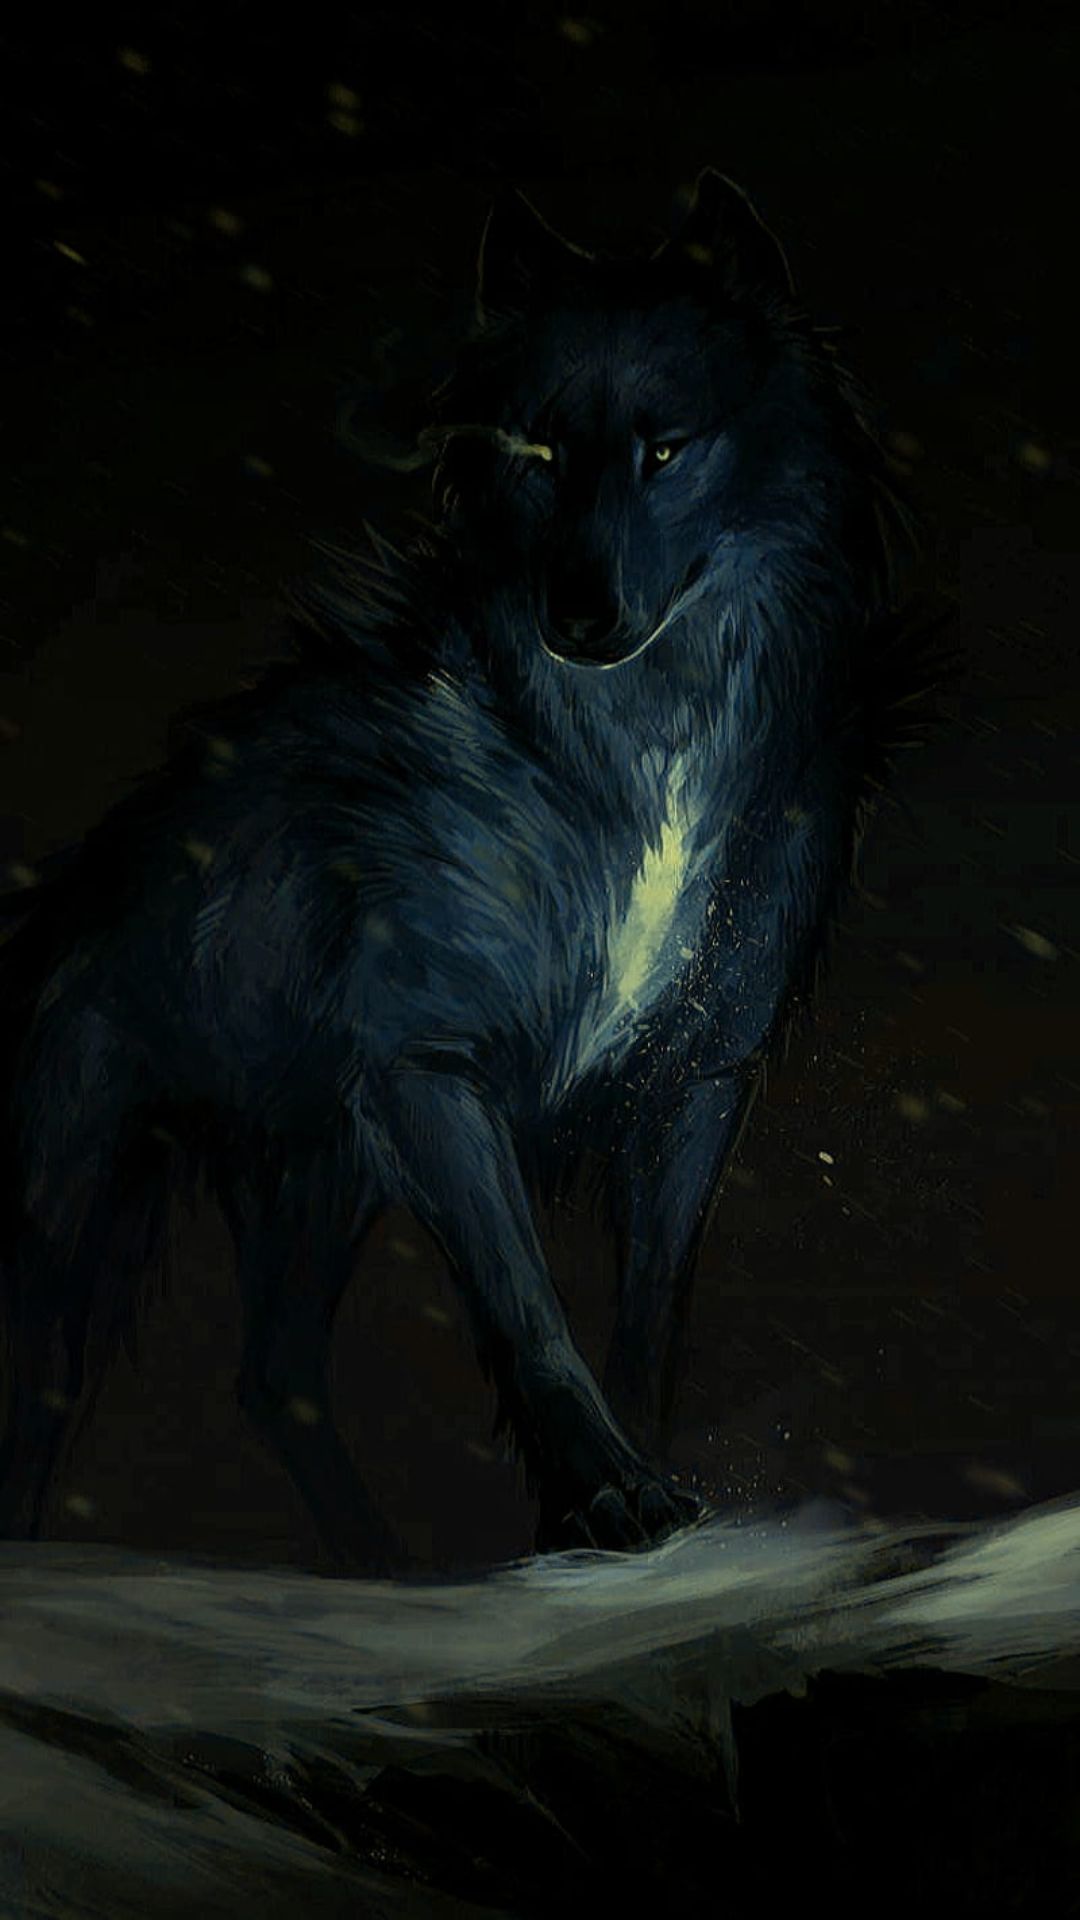 Black Wolf Wallpapers - Top 30 Best Black Wolf Wallpapers Download